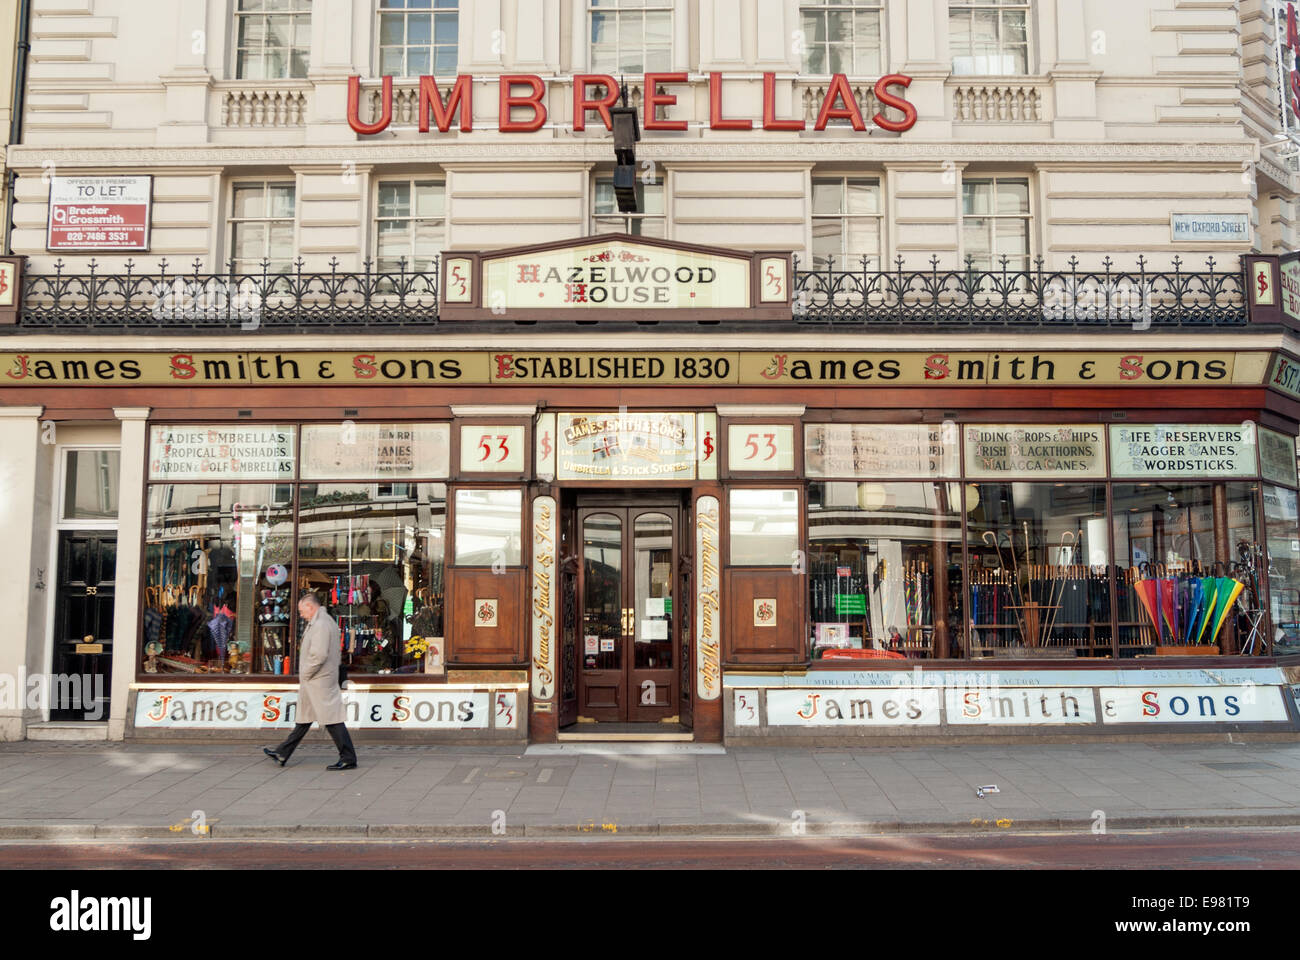 James Smith & Sons umbrellas shop, London, England, UK Stock Photo - Alamy